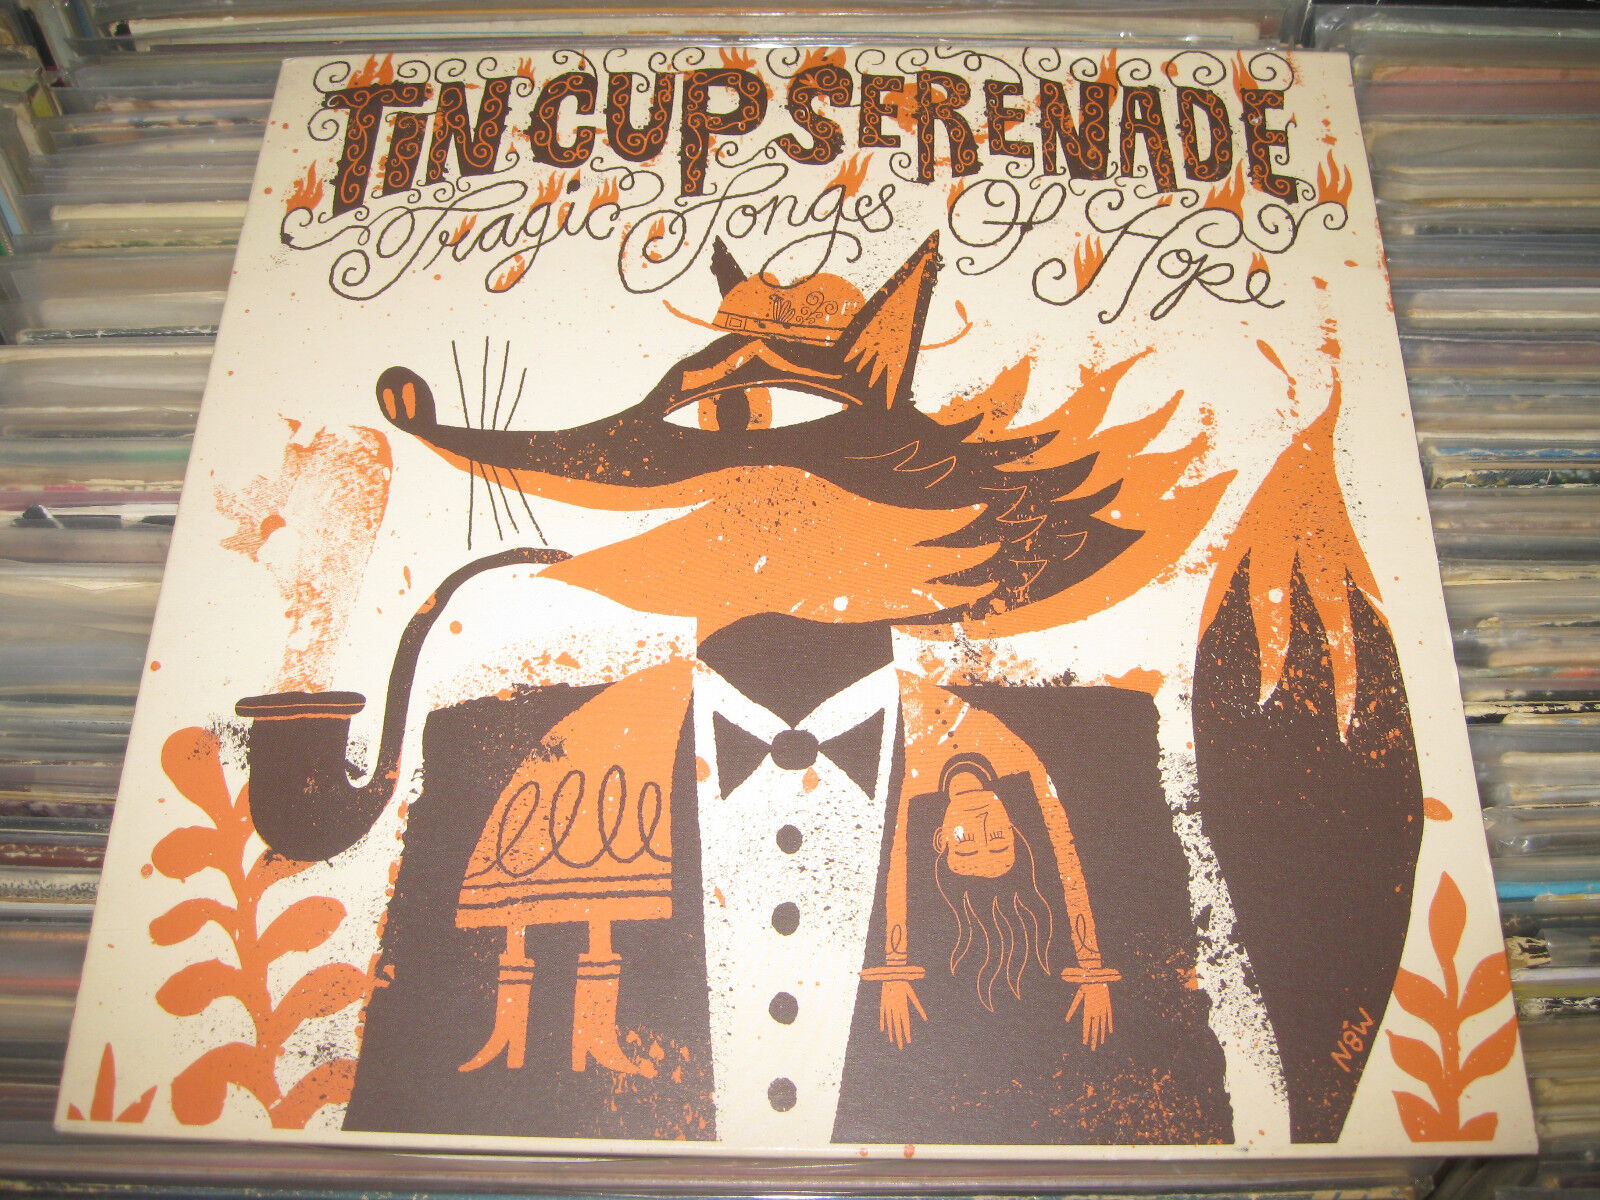 TIN CUP SERENADE 10" LP TRAGIC SONGS OF HOPE INDIE FOLK POP PSYCH JAZZ ROCK 